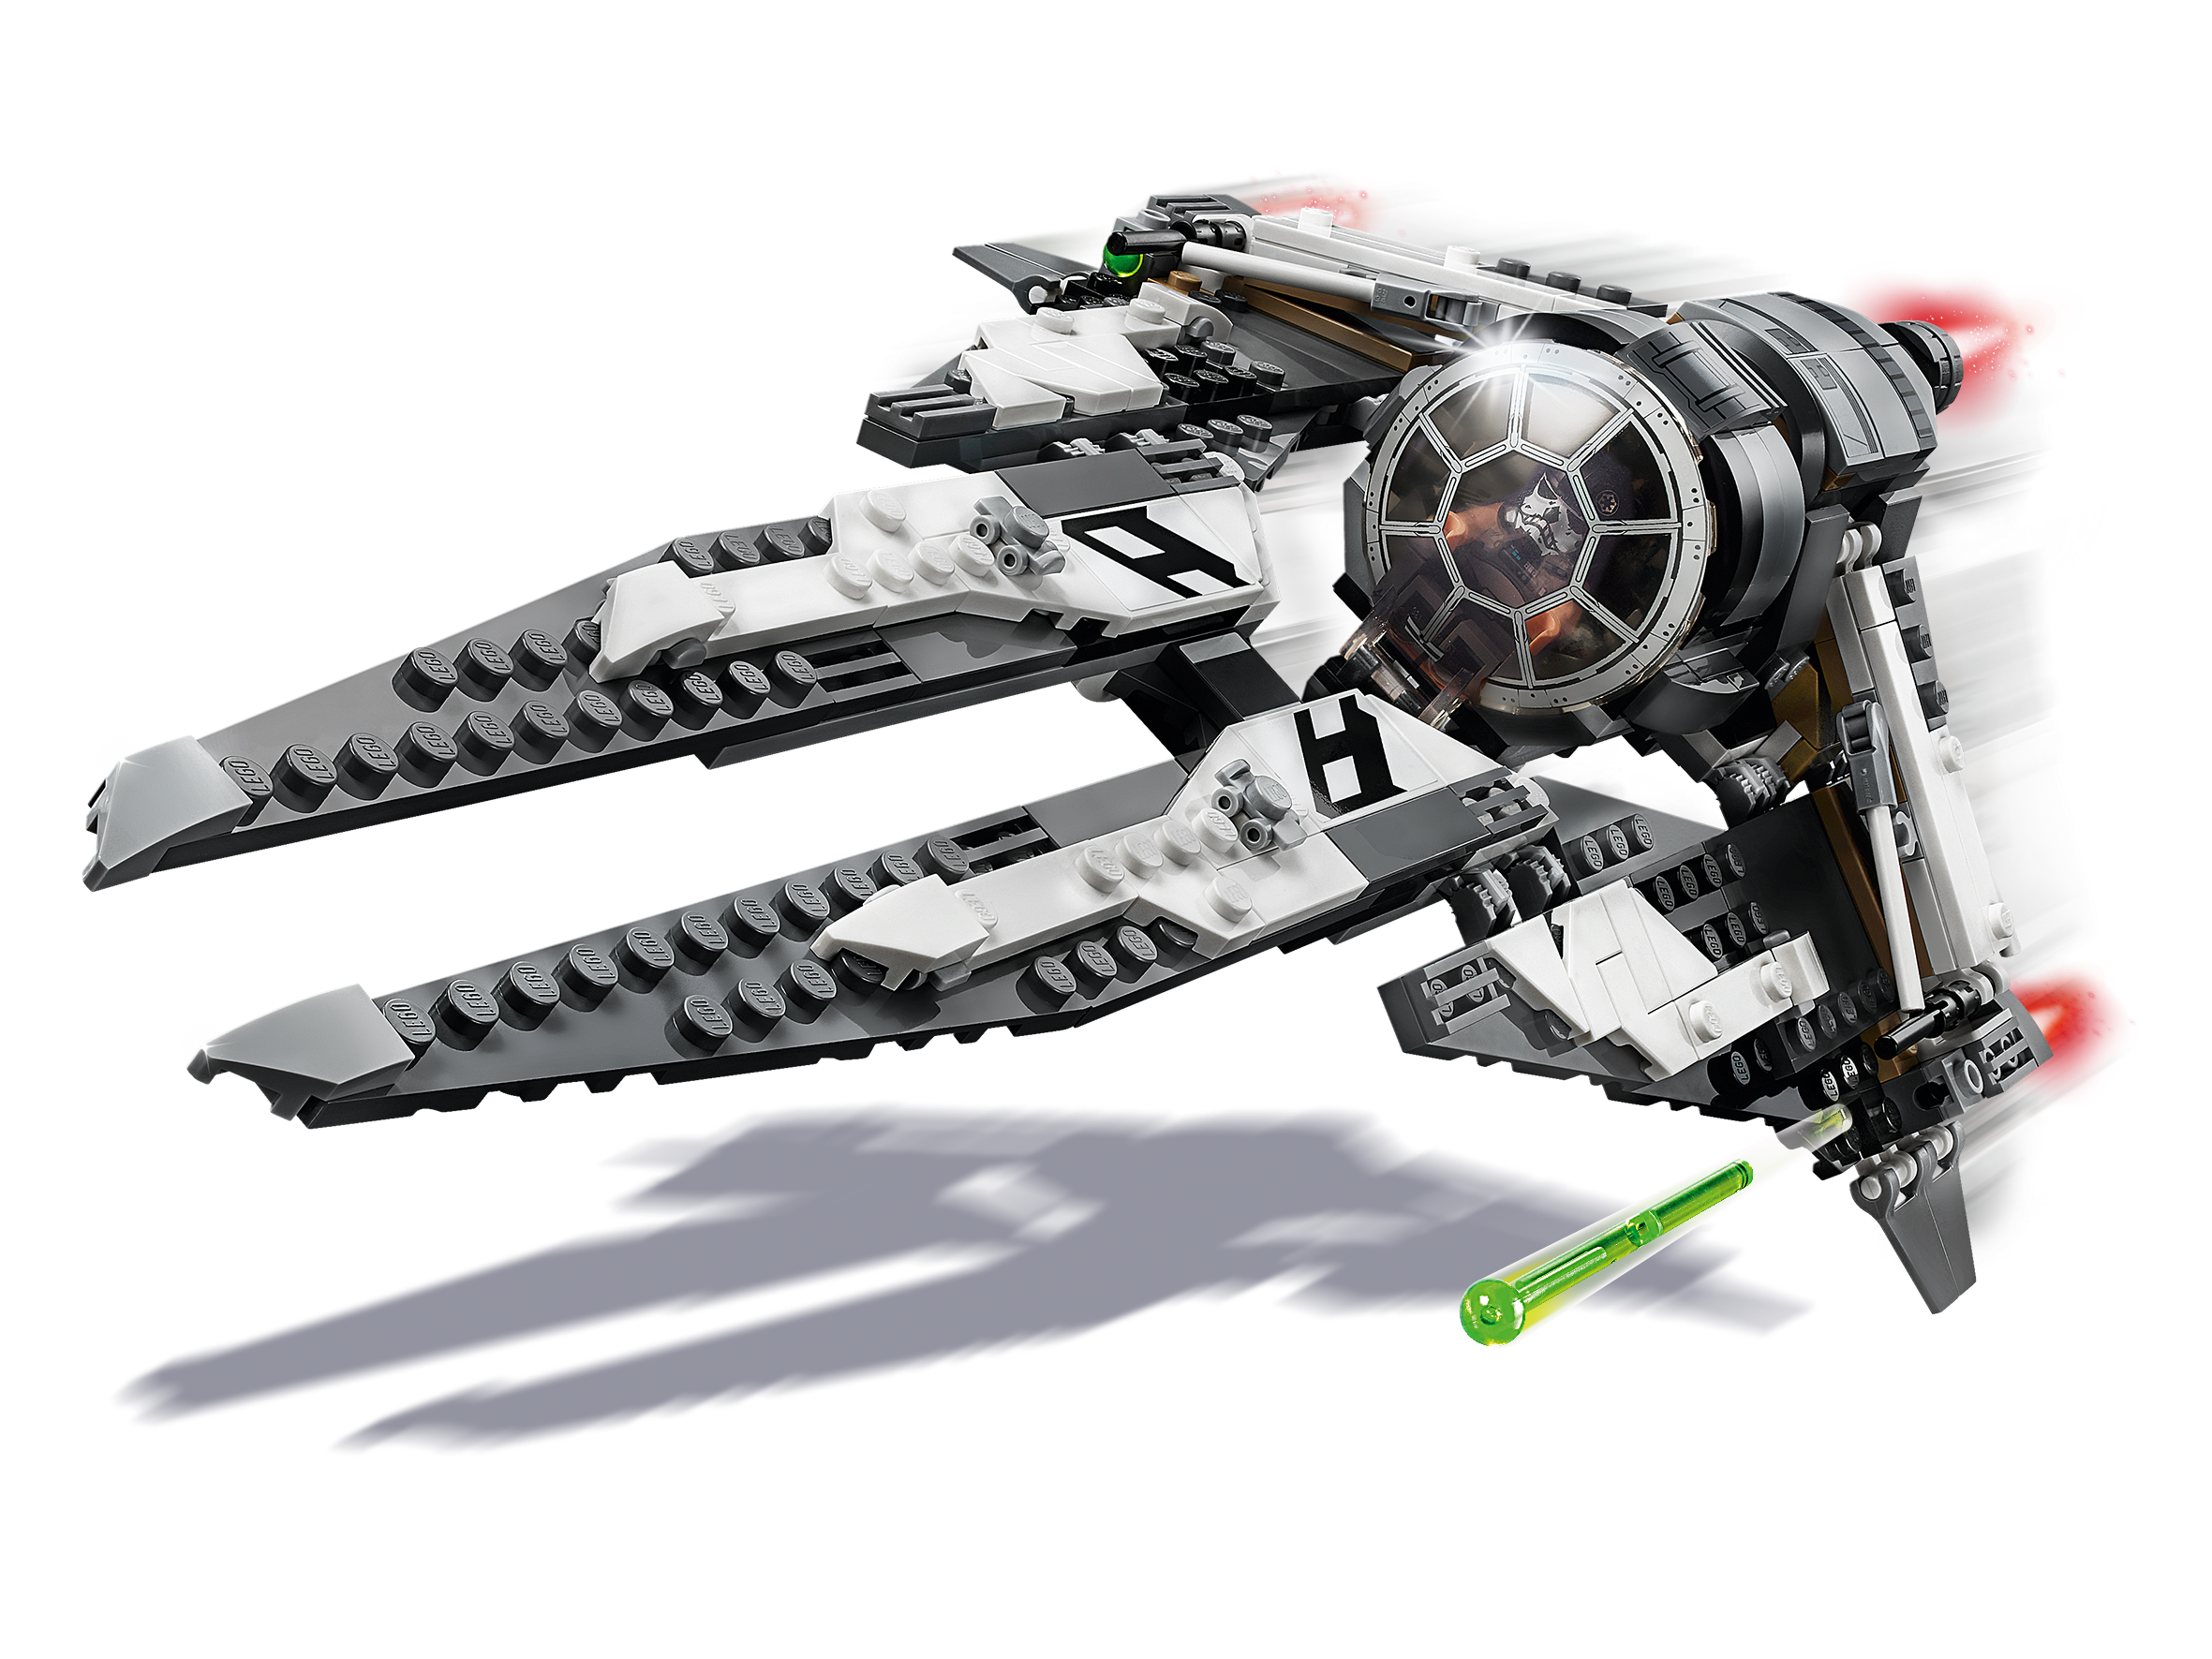 Lego Griff Halloran 75242 Black Ace TIE Interceptor Star Wars Minifigure